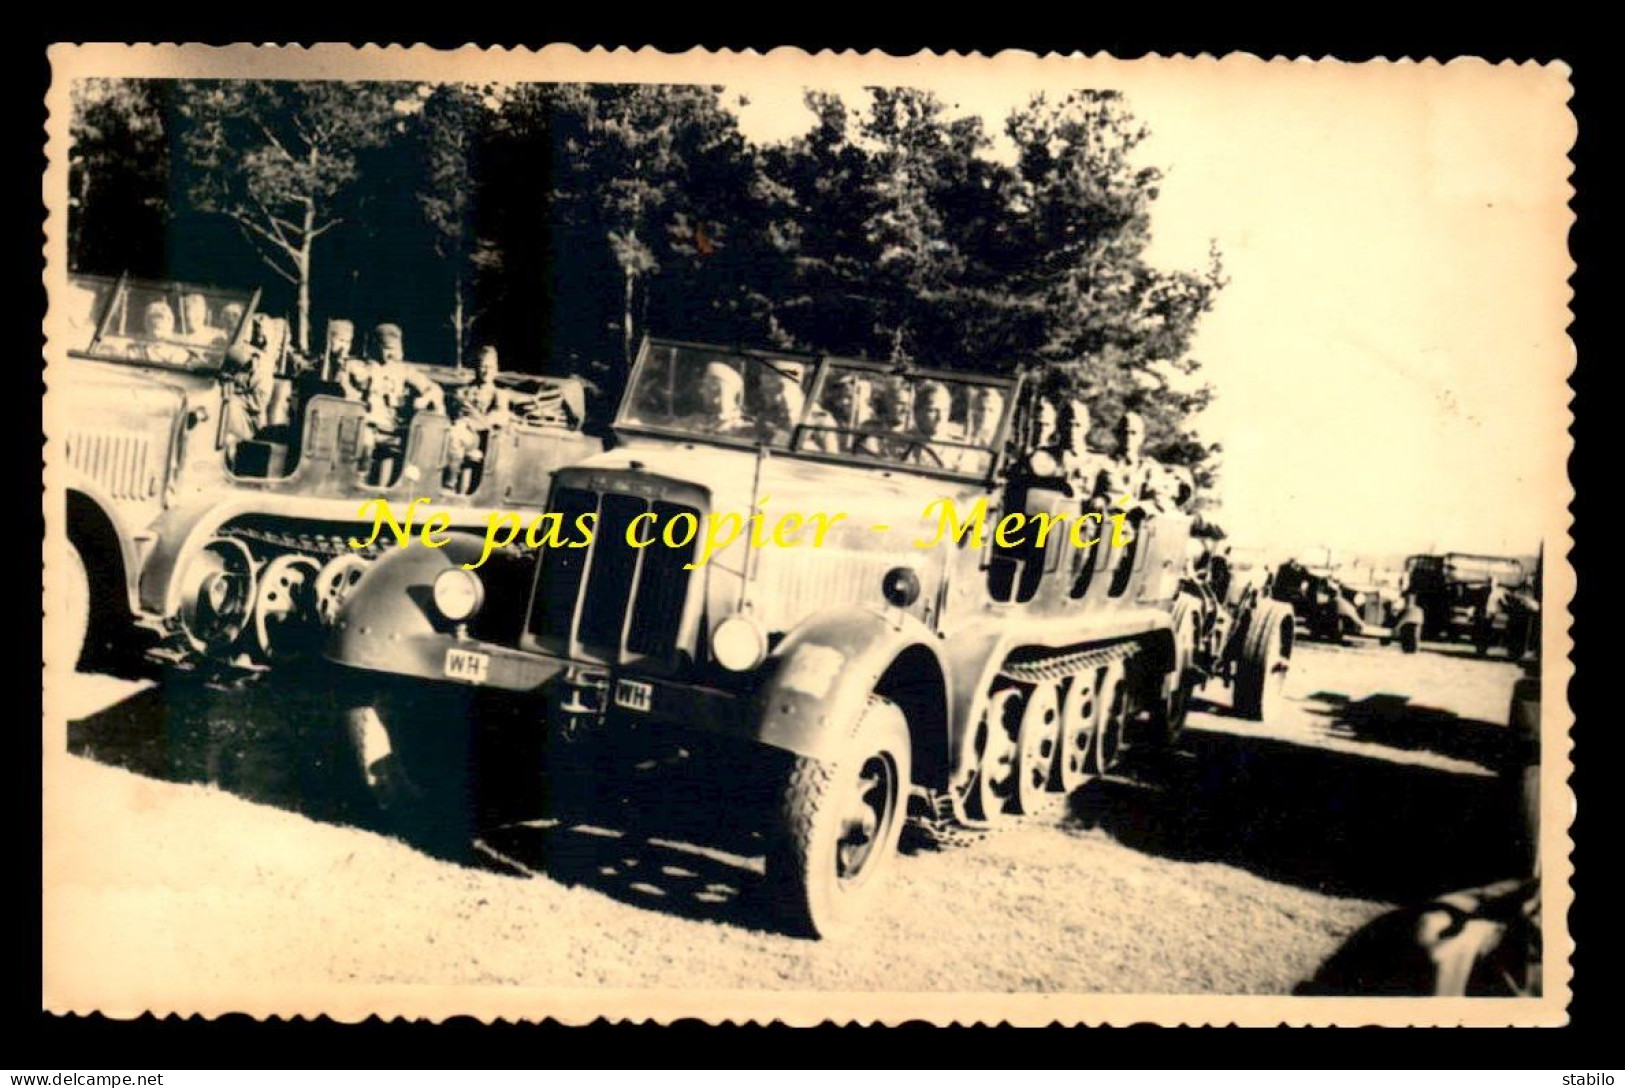 GUERRE 39/45 - BLINDE SEMI-CHENILLE ALLEMAND DEMAG D6 - CARTE PHOTO ORIGINALE - War 1939-45